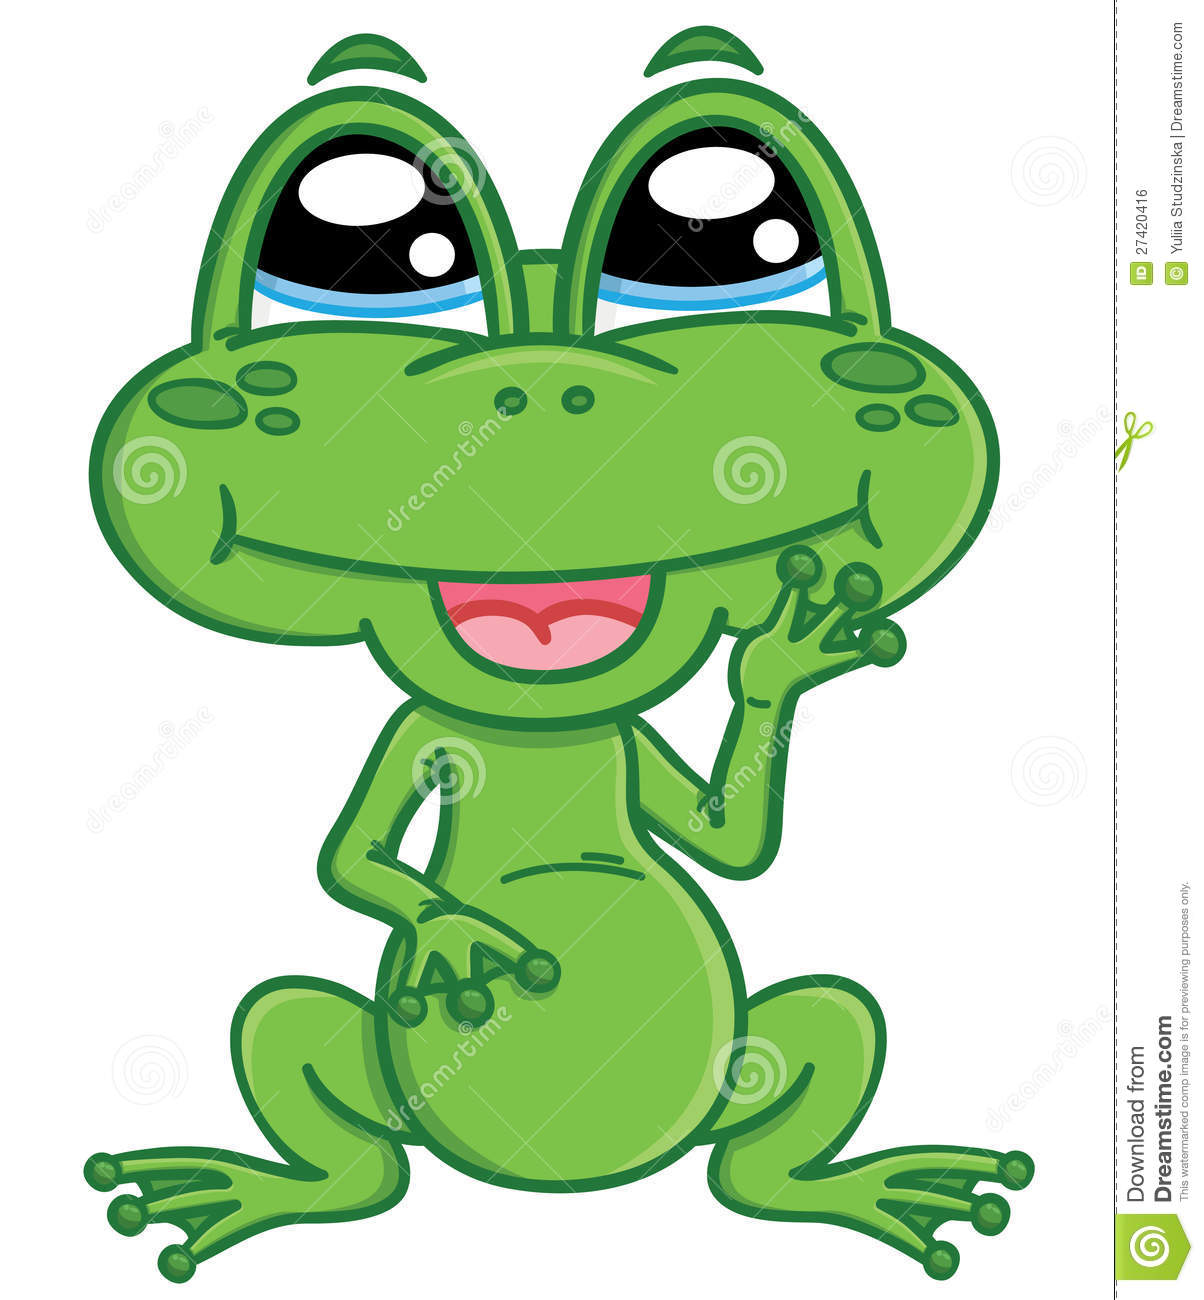 Cute Cartoon Frog Royalty Free Stock Image   Image  27420416